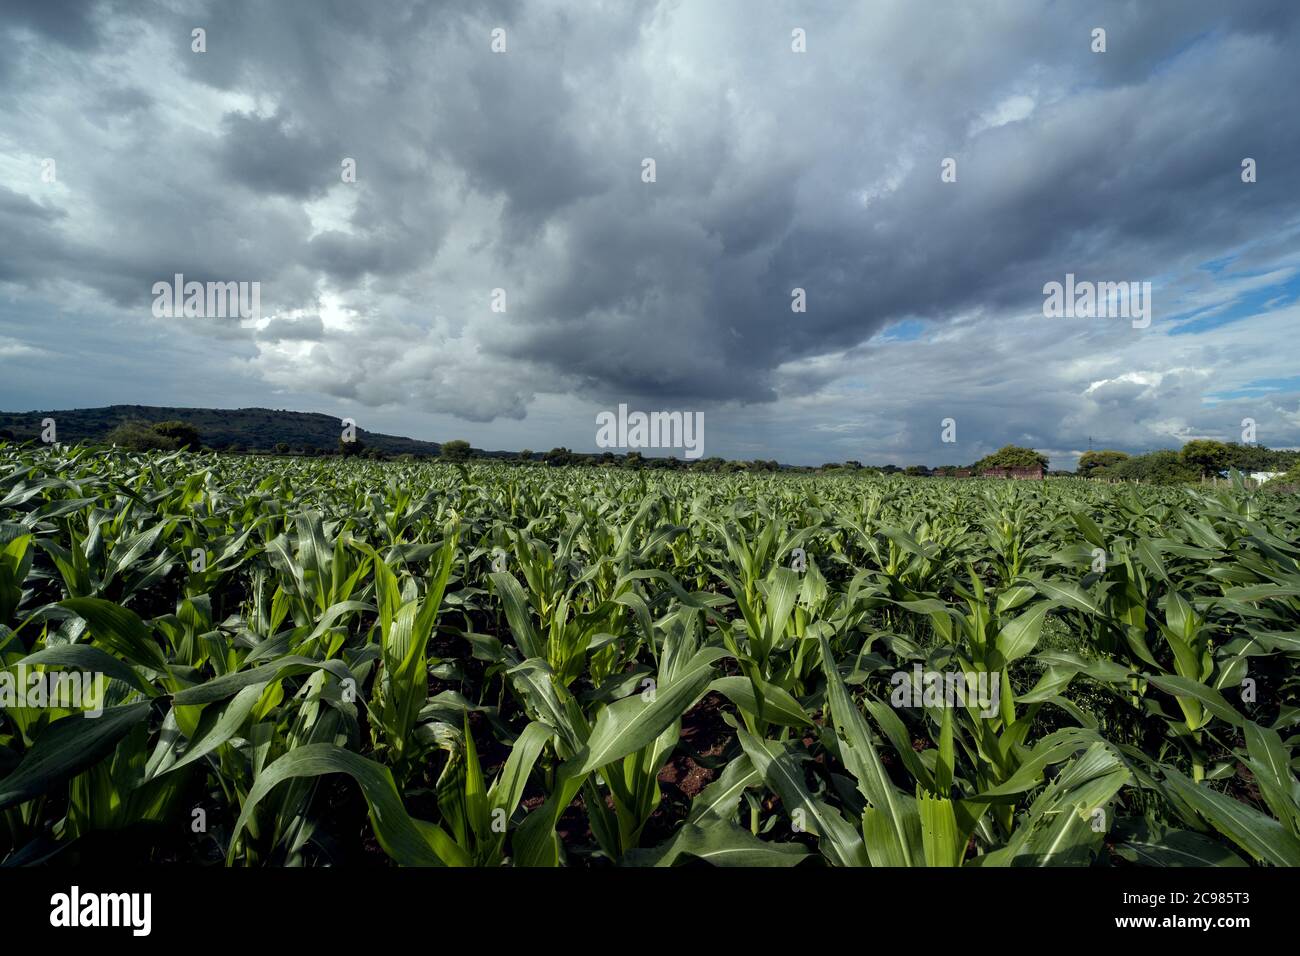 Corn field and corn farm in monsoon weather Stock Photo